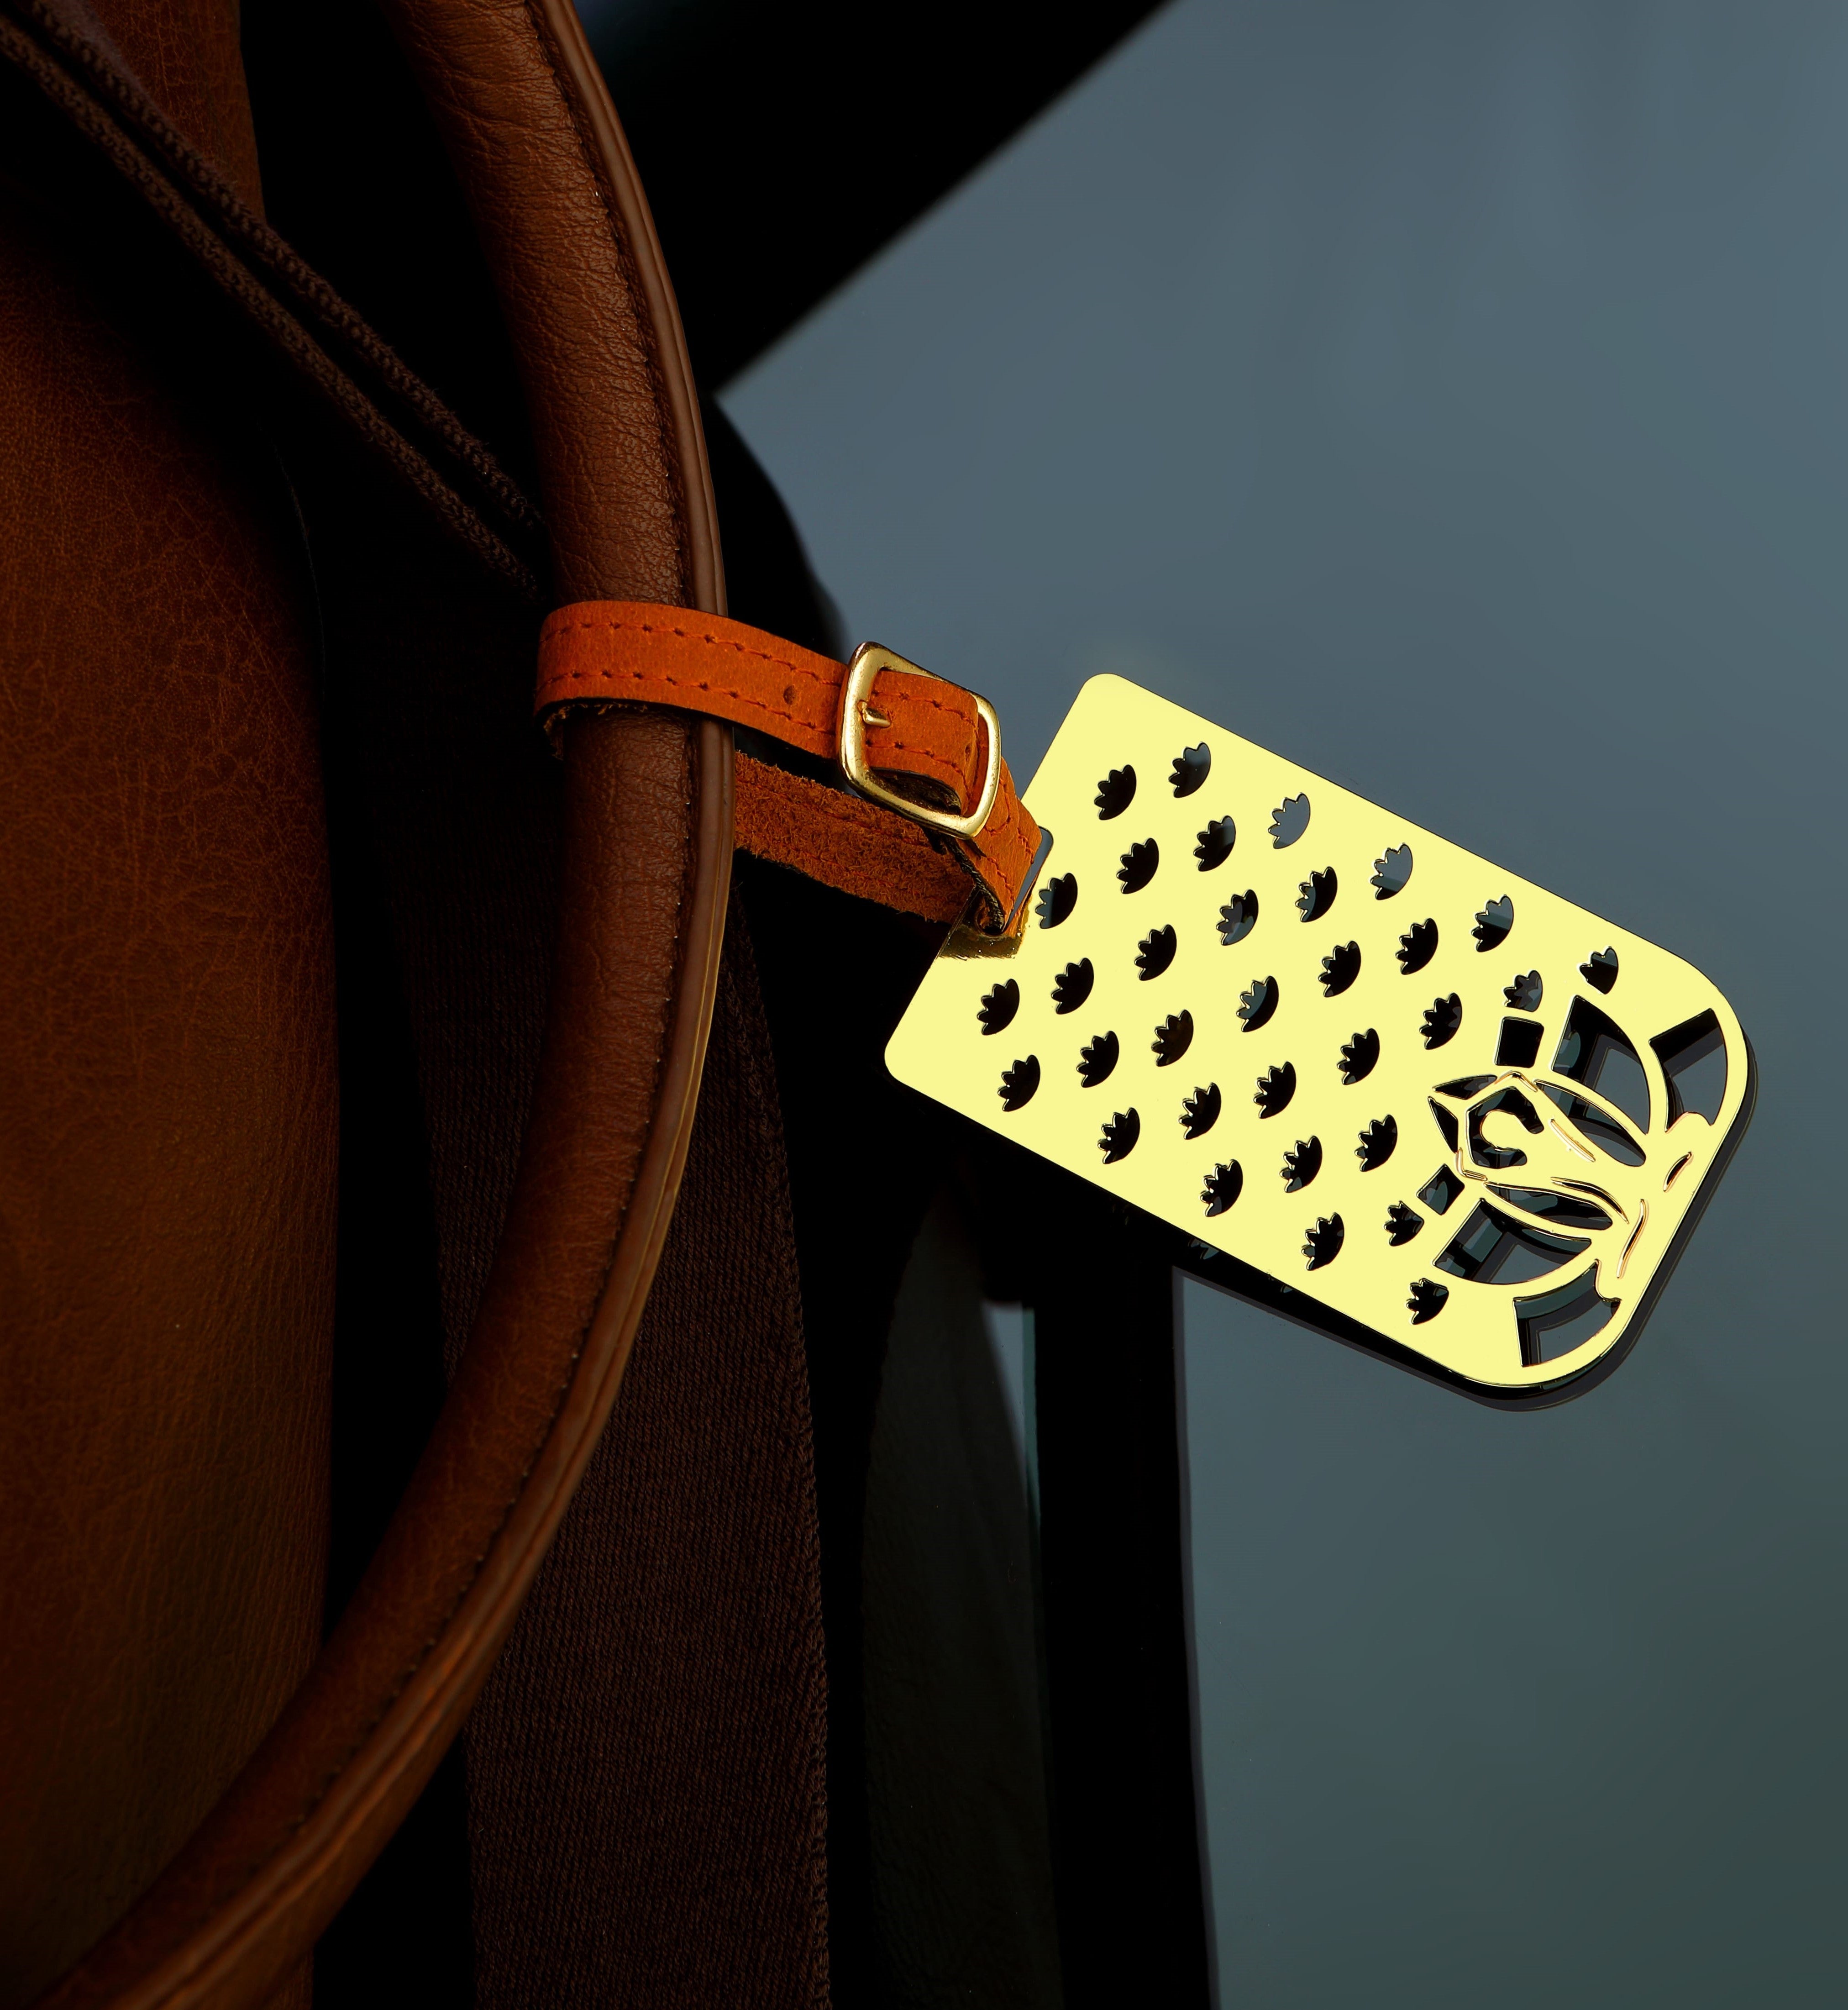 Adoraa's Rythym Collection Yoga Brass Luggage Tag